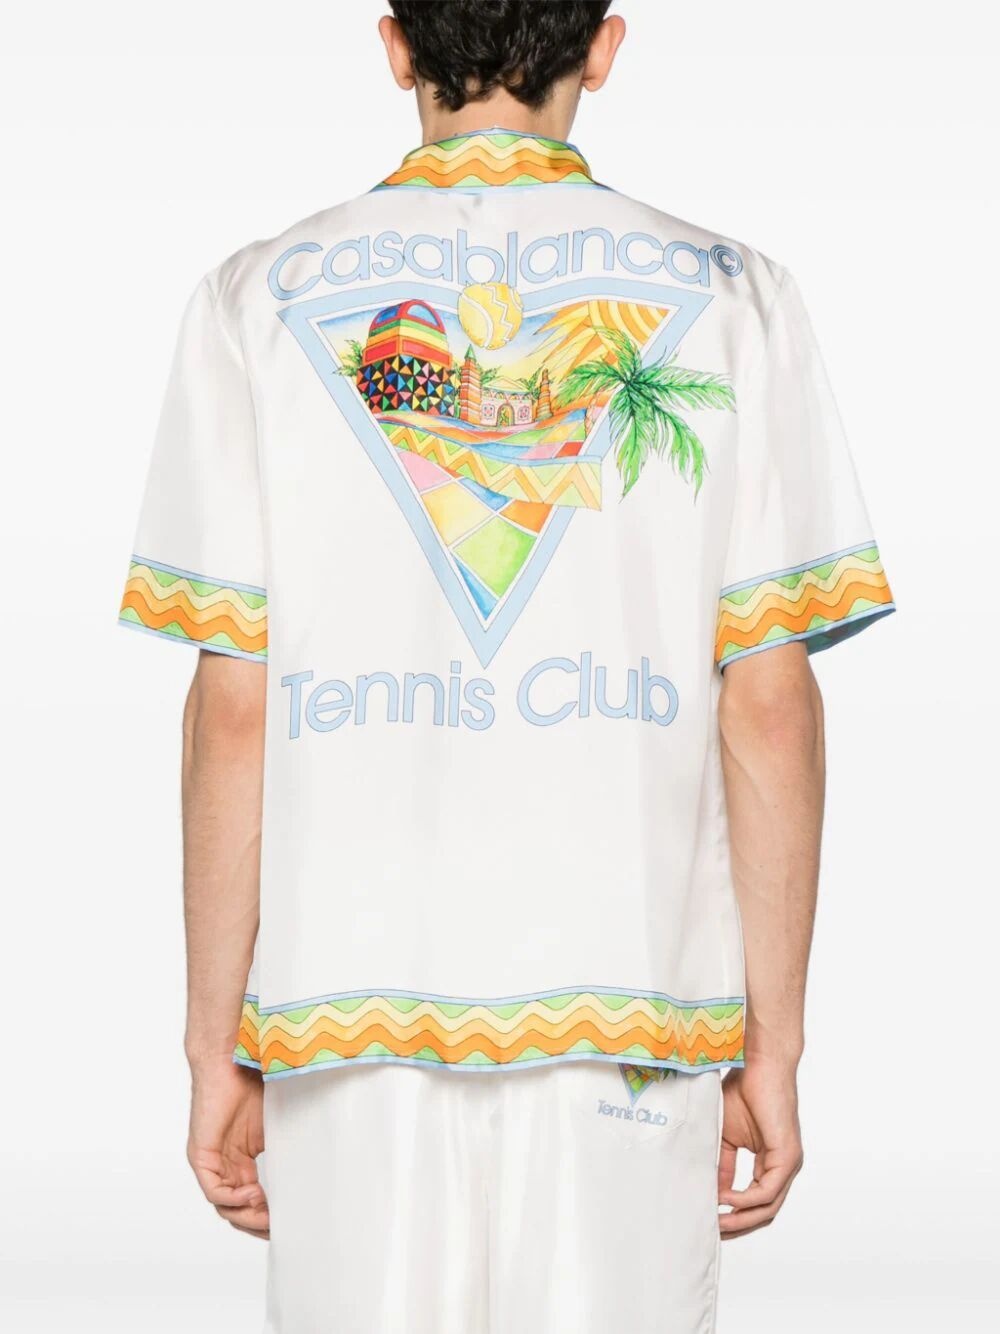 Afro cubism tennis club shirt - 8